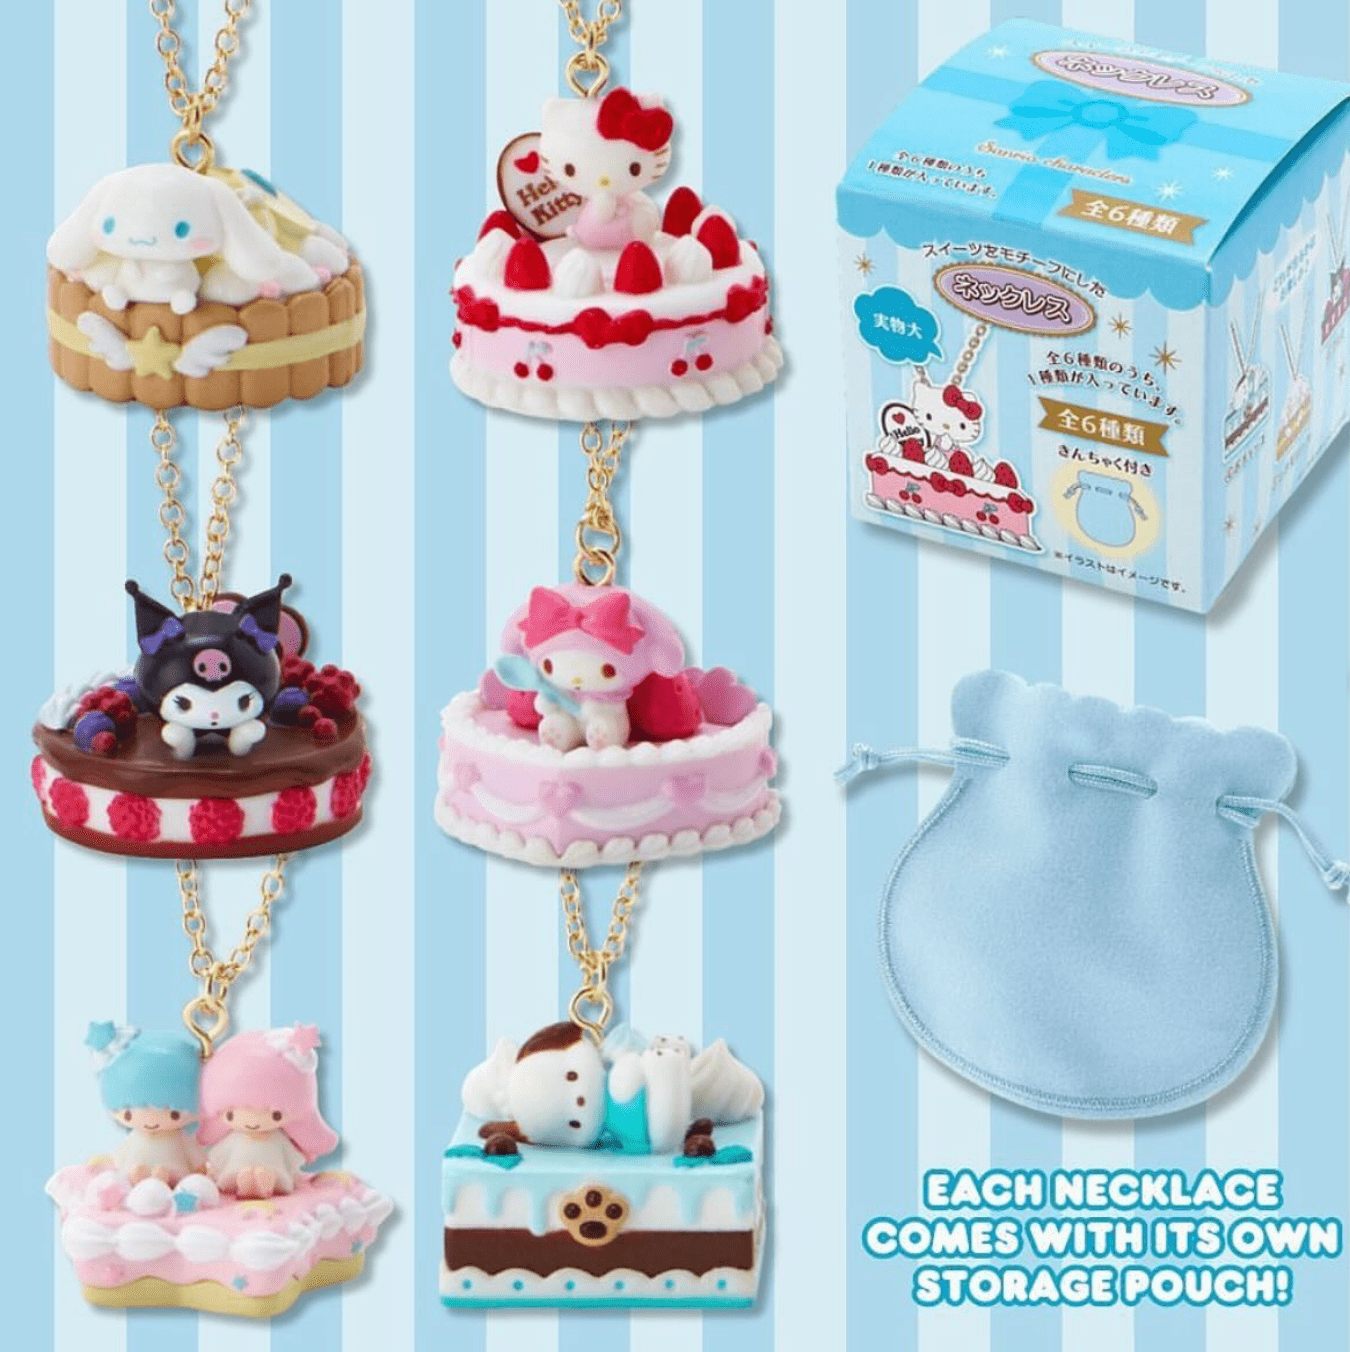 Enesco Sanrio Friends Sweet Cake Necklace Surprise Box Kawaii Gifts 4550337765340